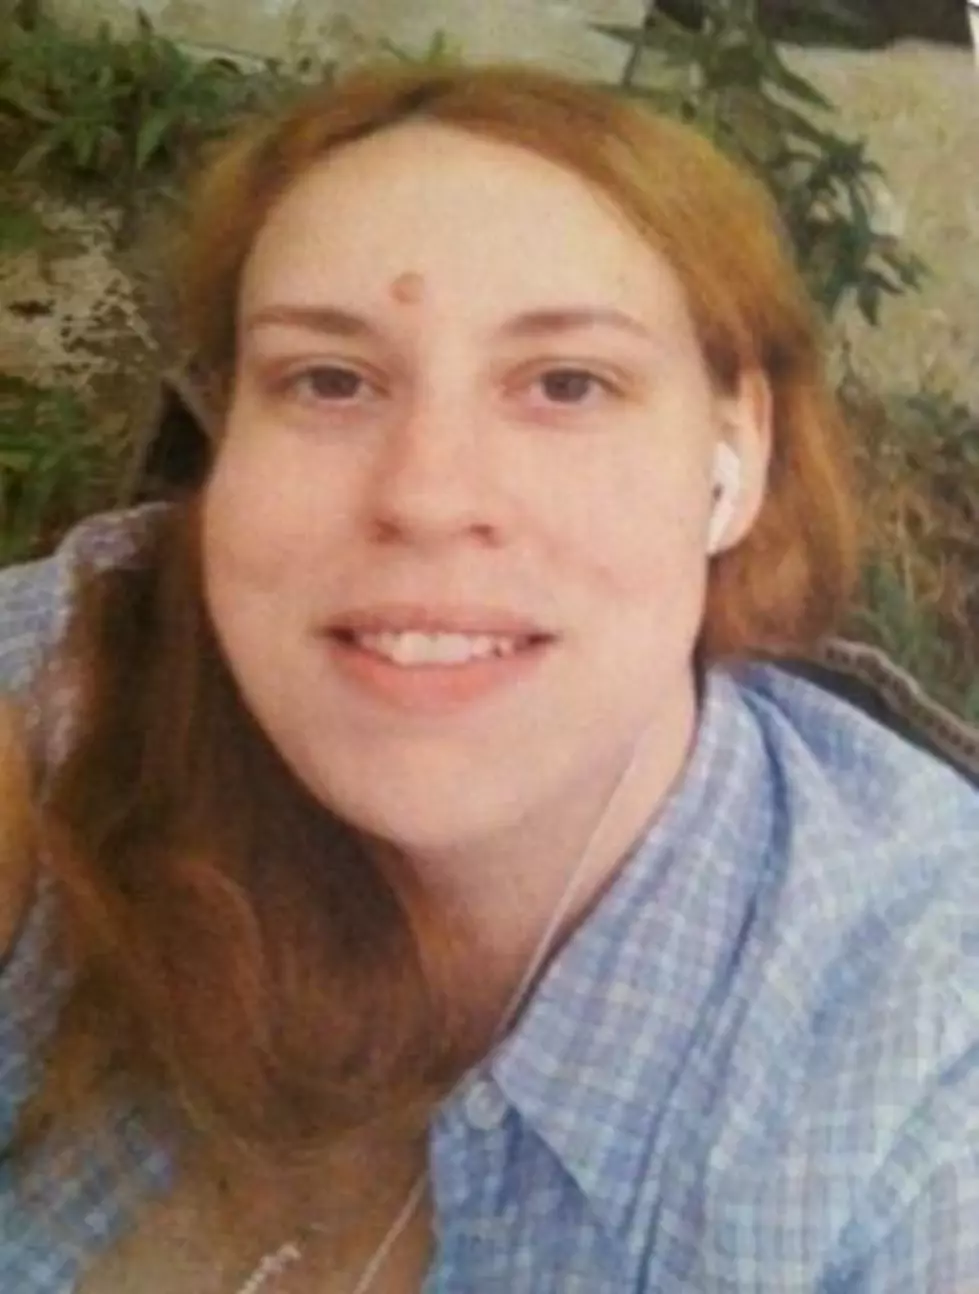 Missing Woman In Rensselaer County